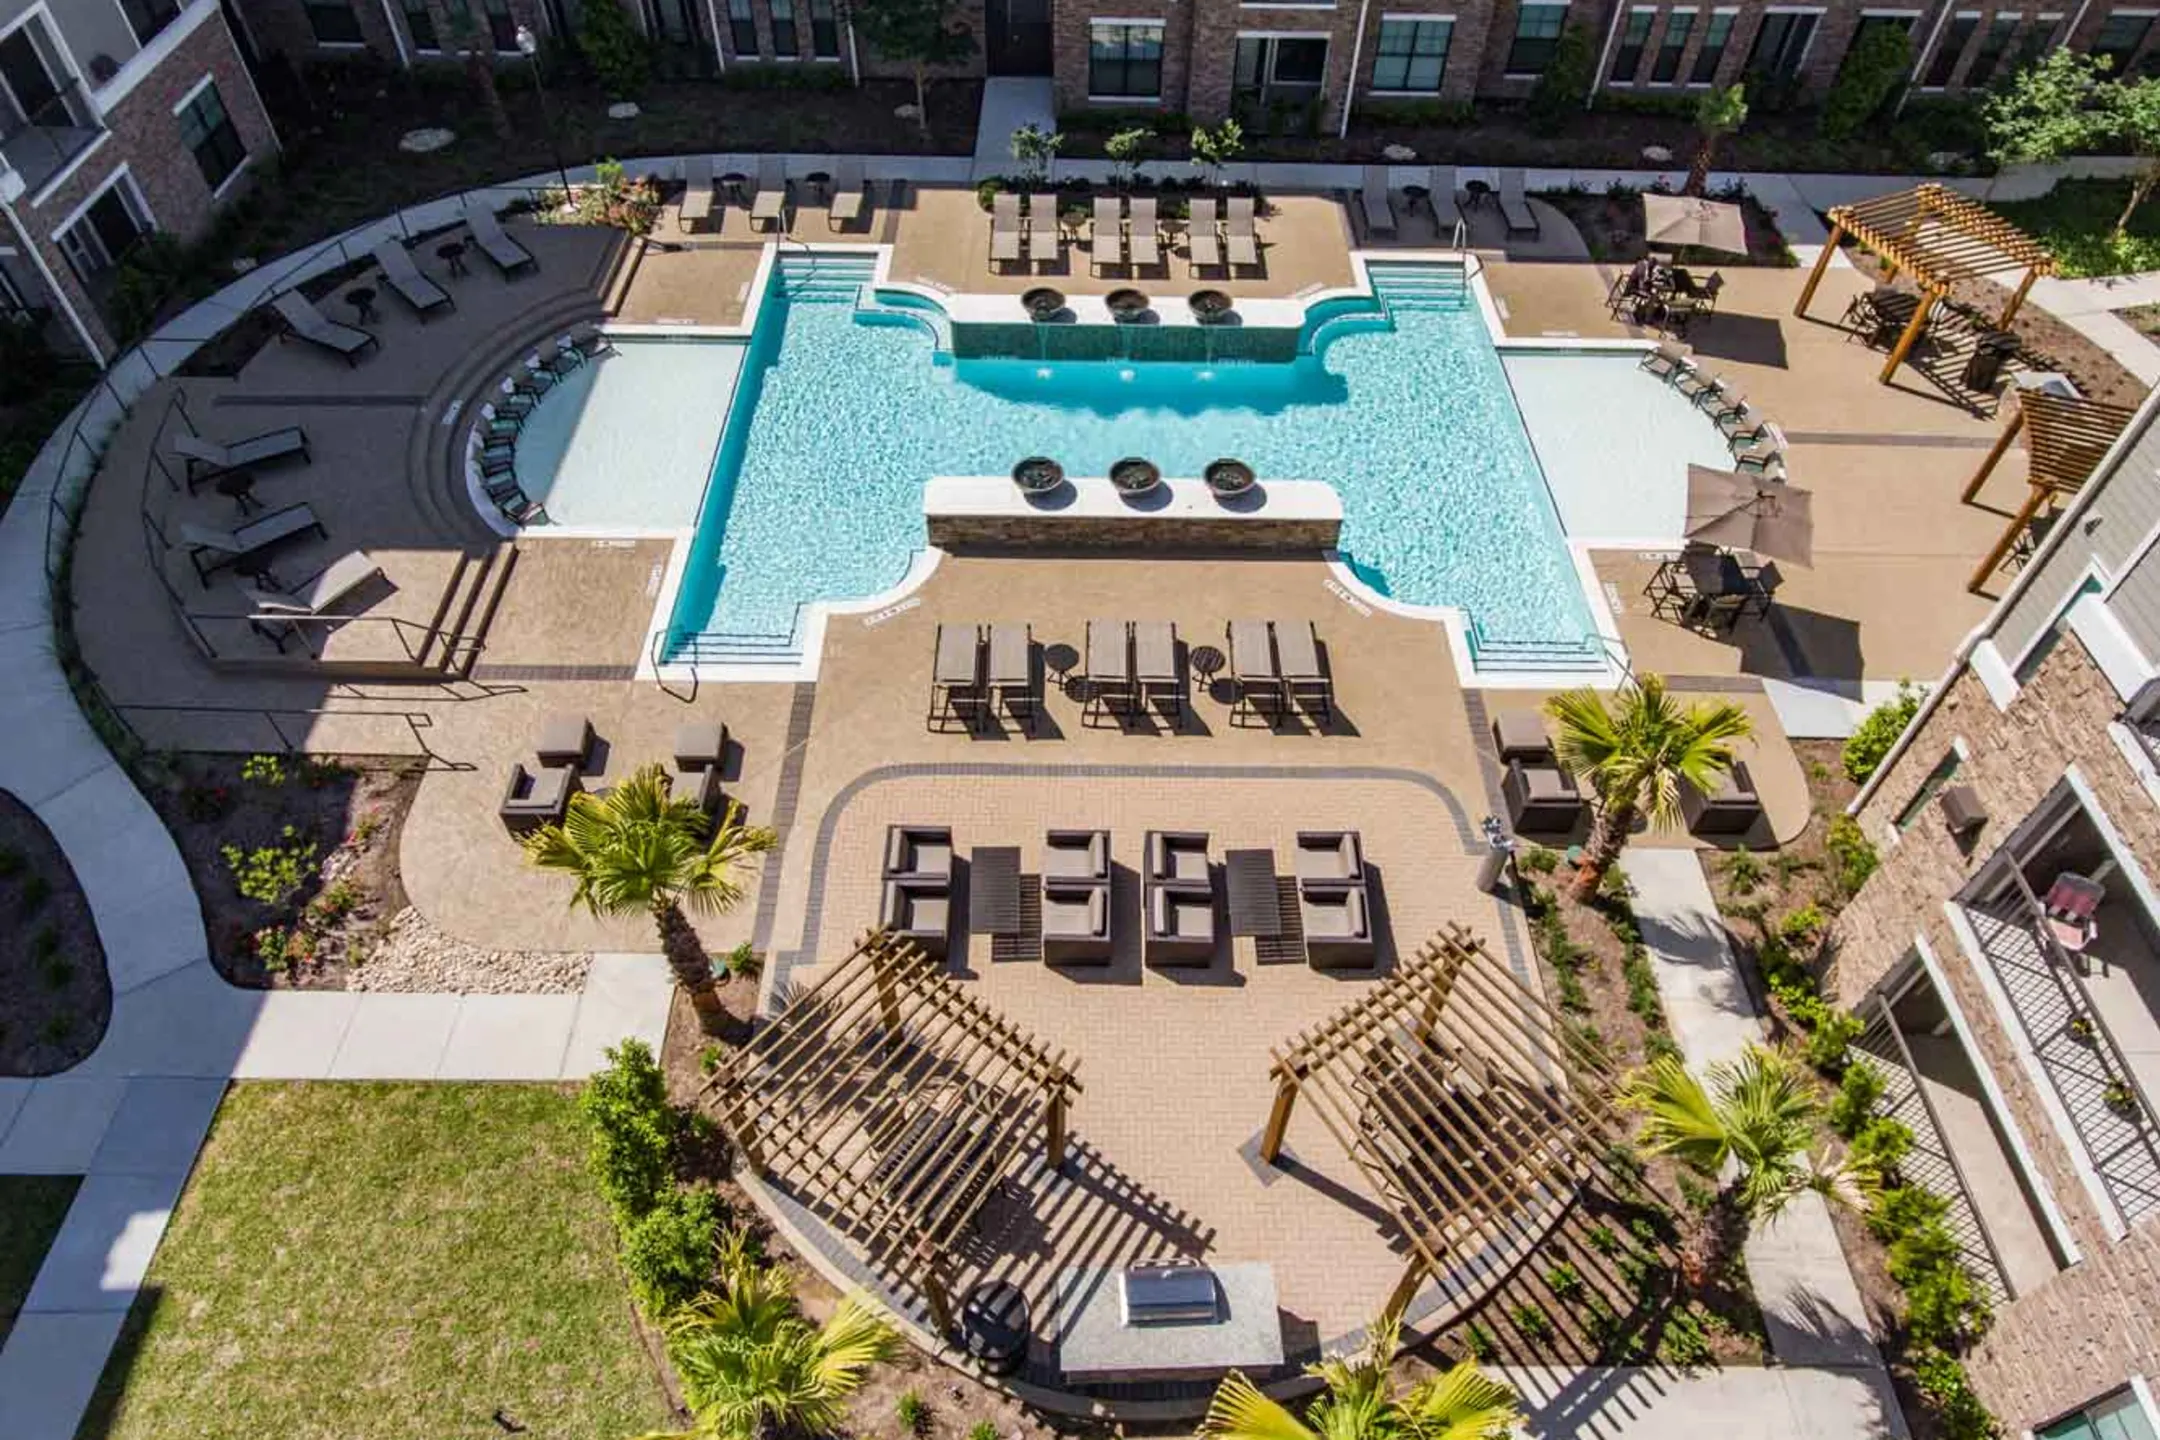 Pool - 77054 Luxury Properties - Houston, TX